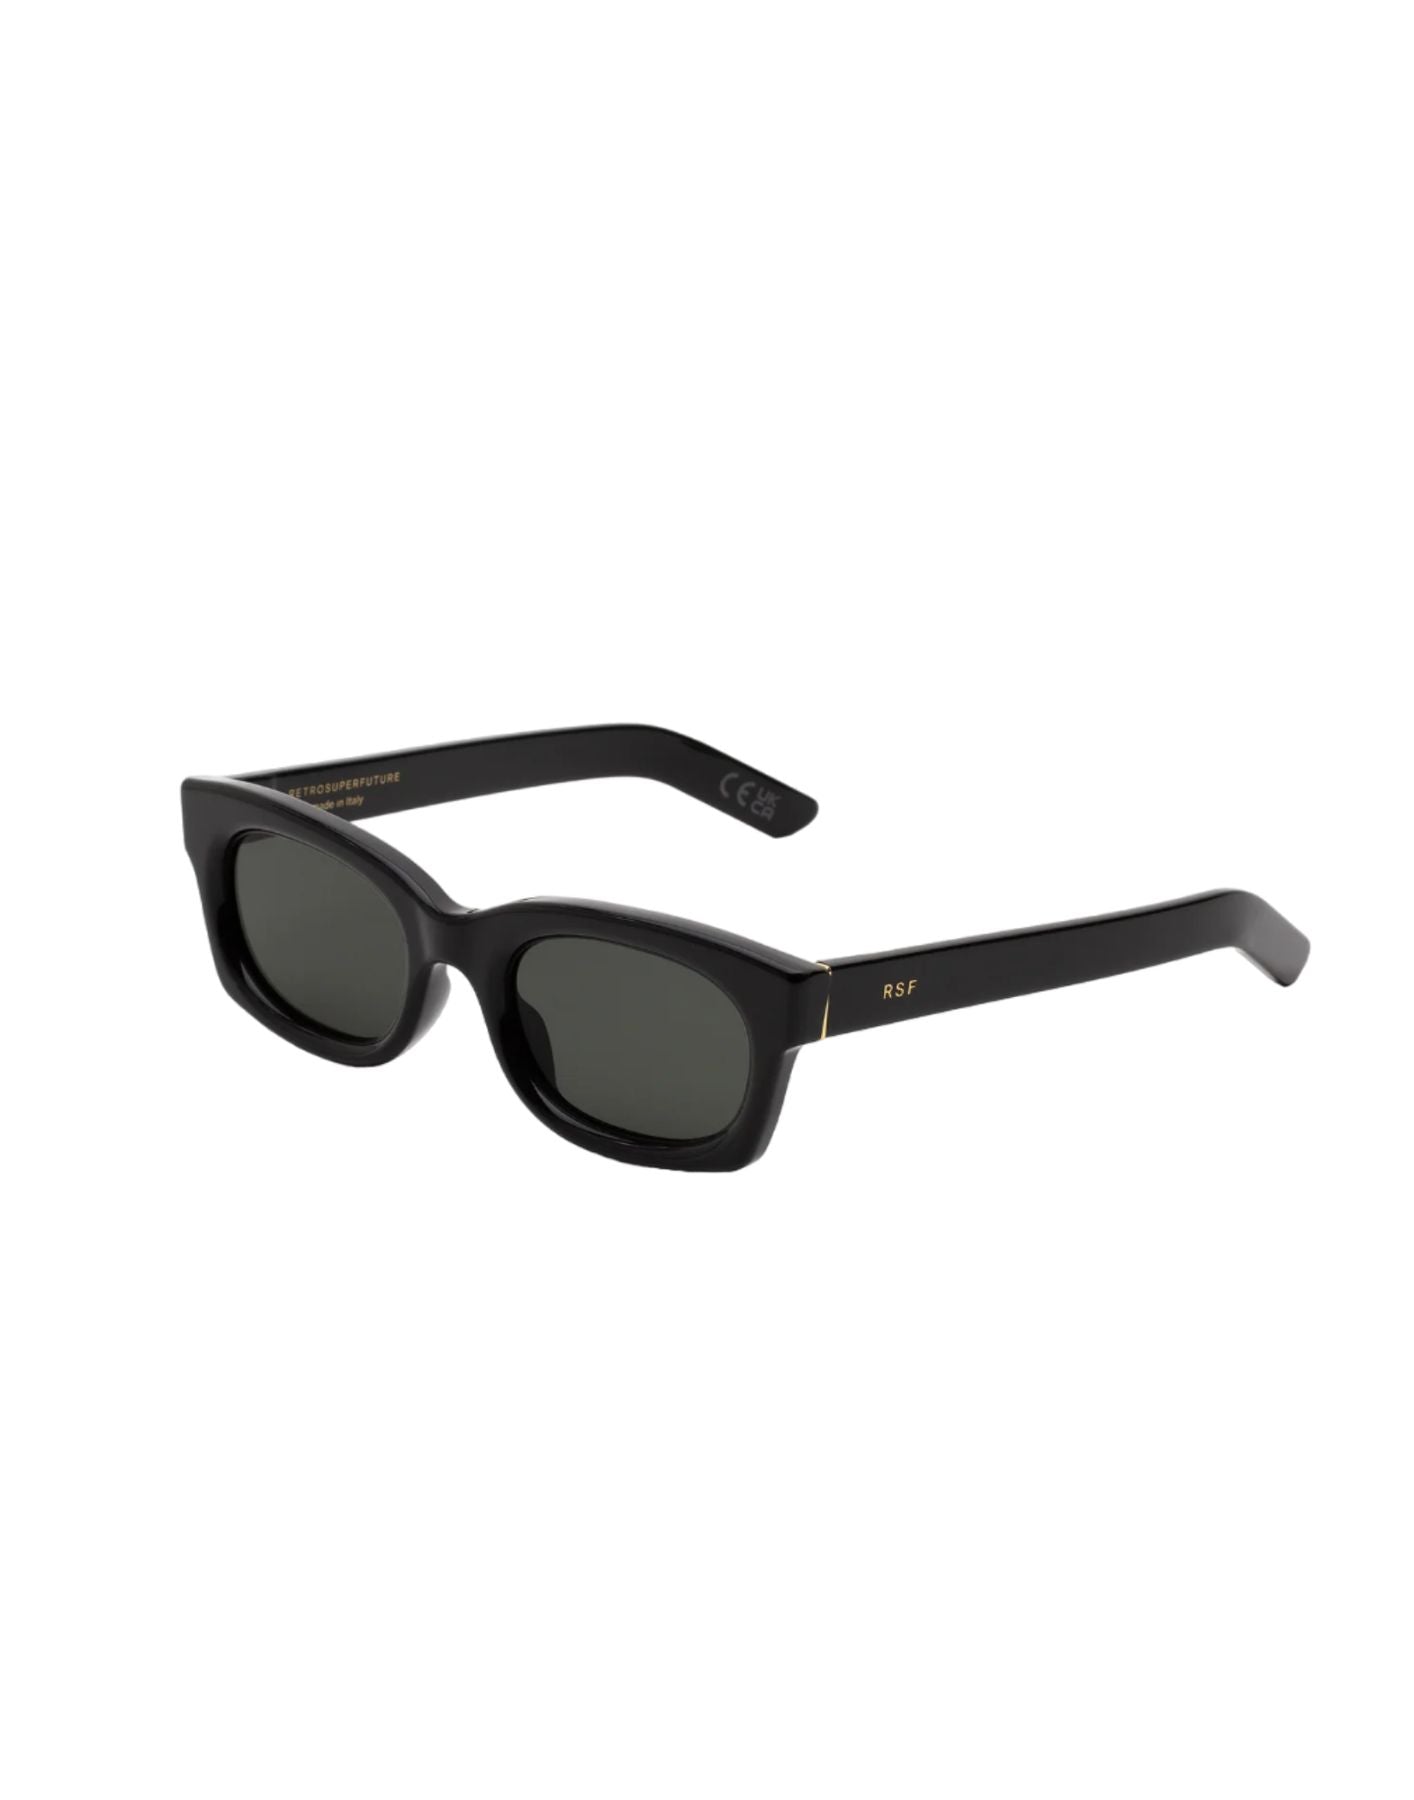 Sunglasses unisex AMBOS BLACK B5B Retrosuperfuture